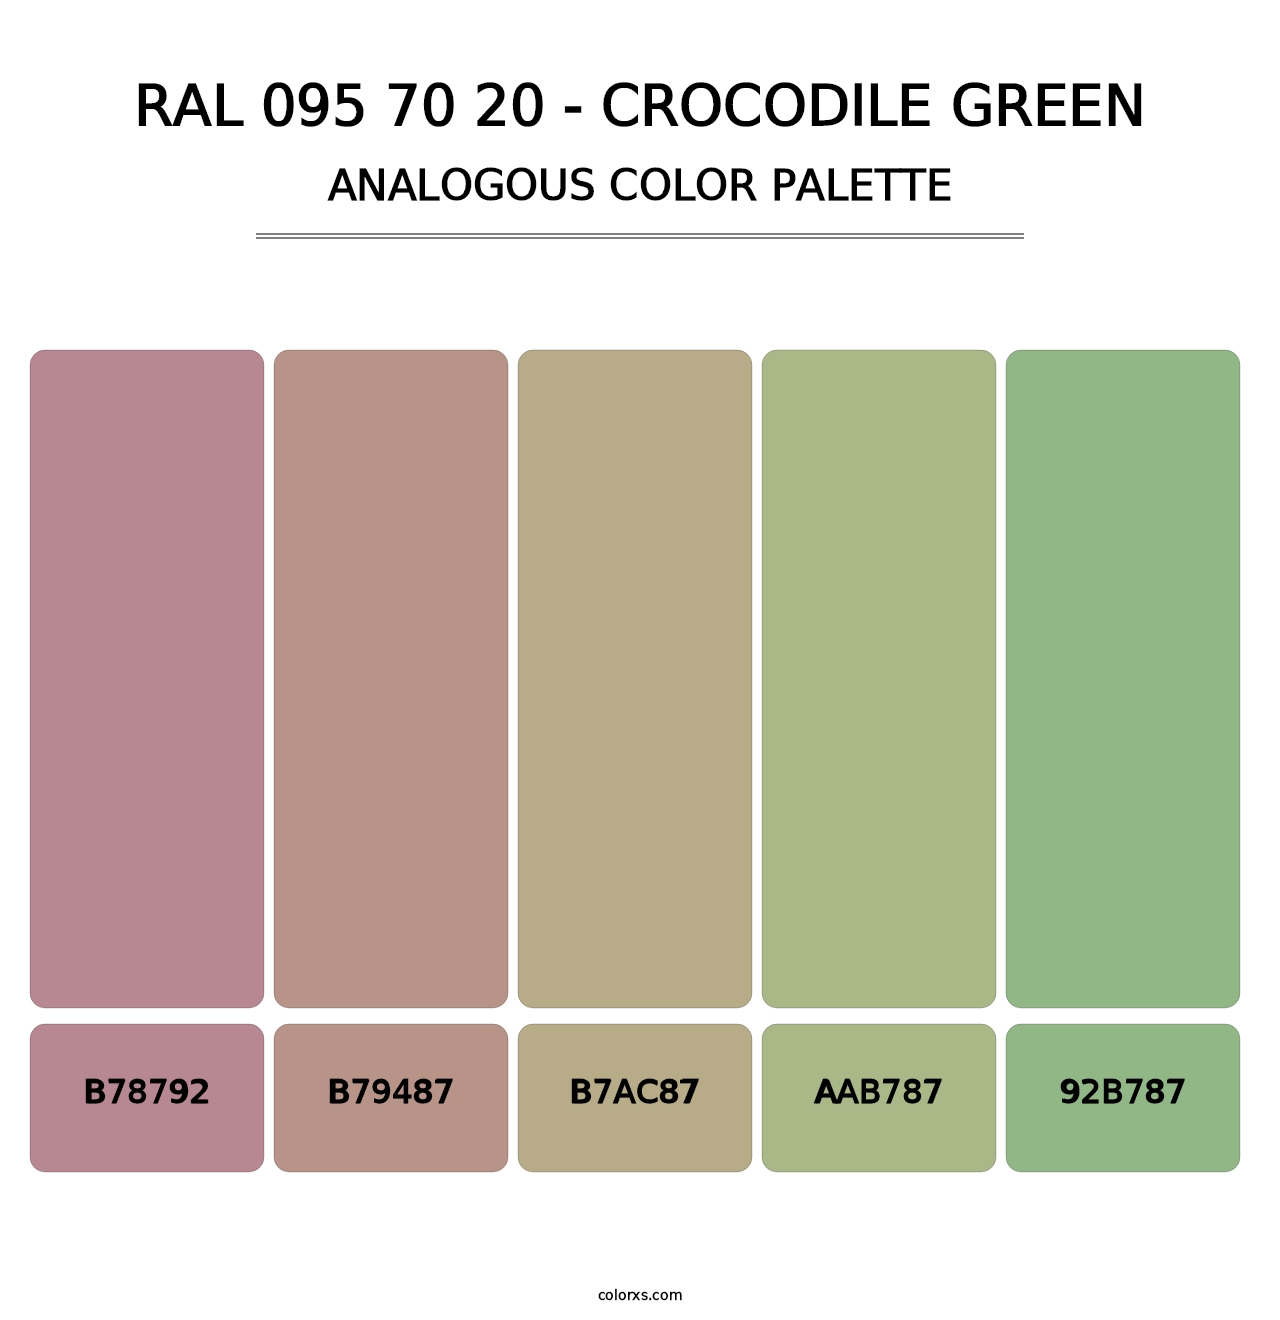 RAL 095 70 20 - Crocodile Green - Analogous Color Palette